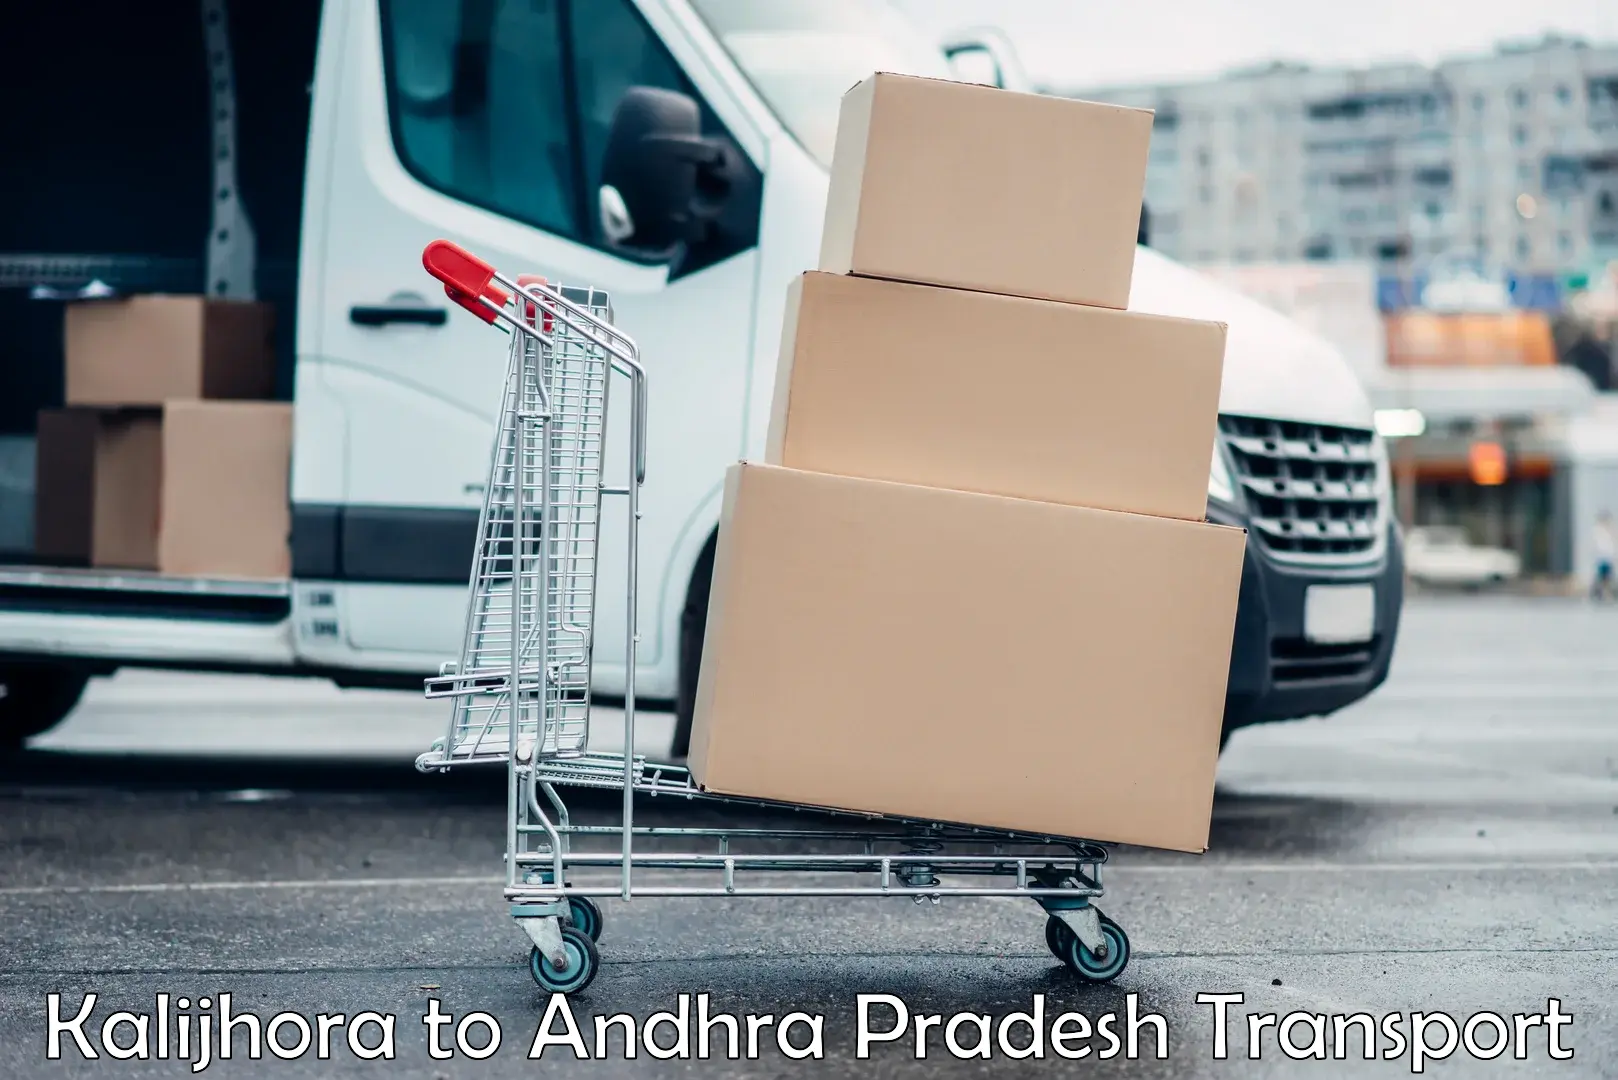 Truck transport companies in India Kalijhora to Gannavaram